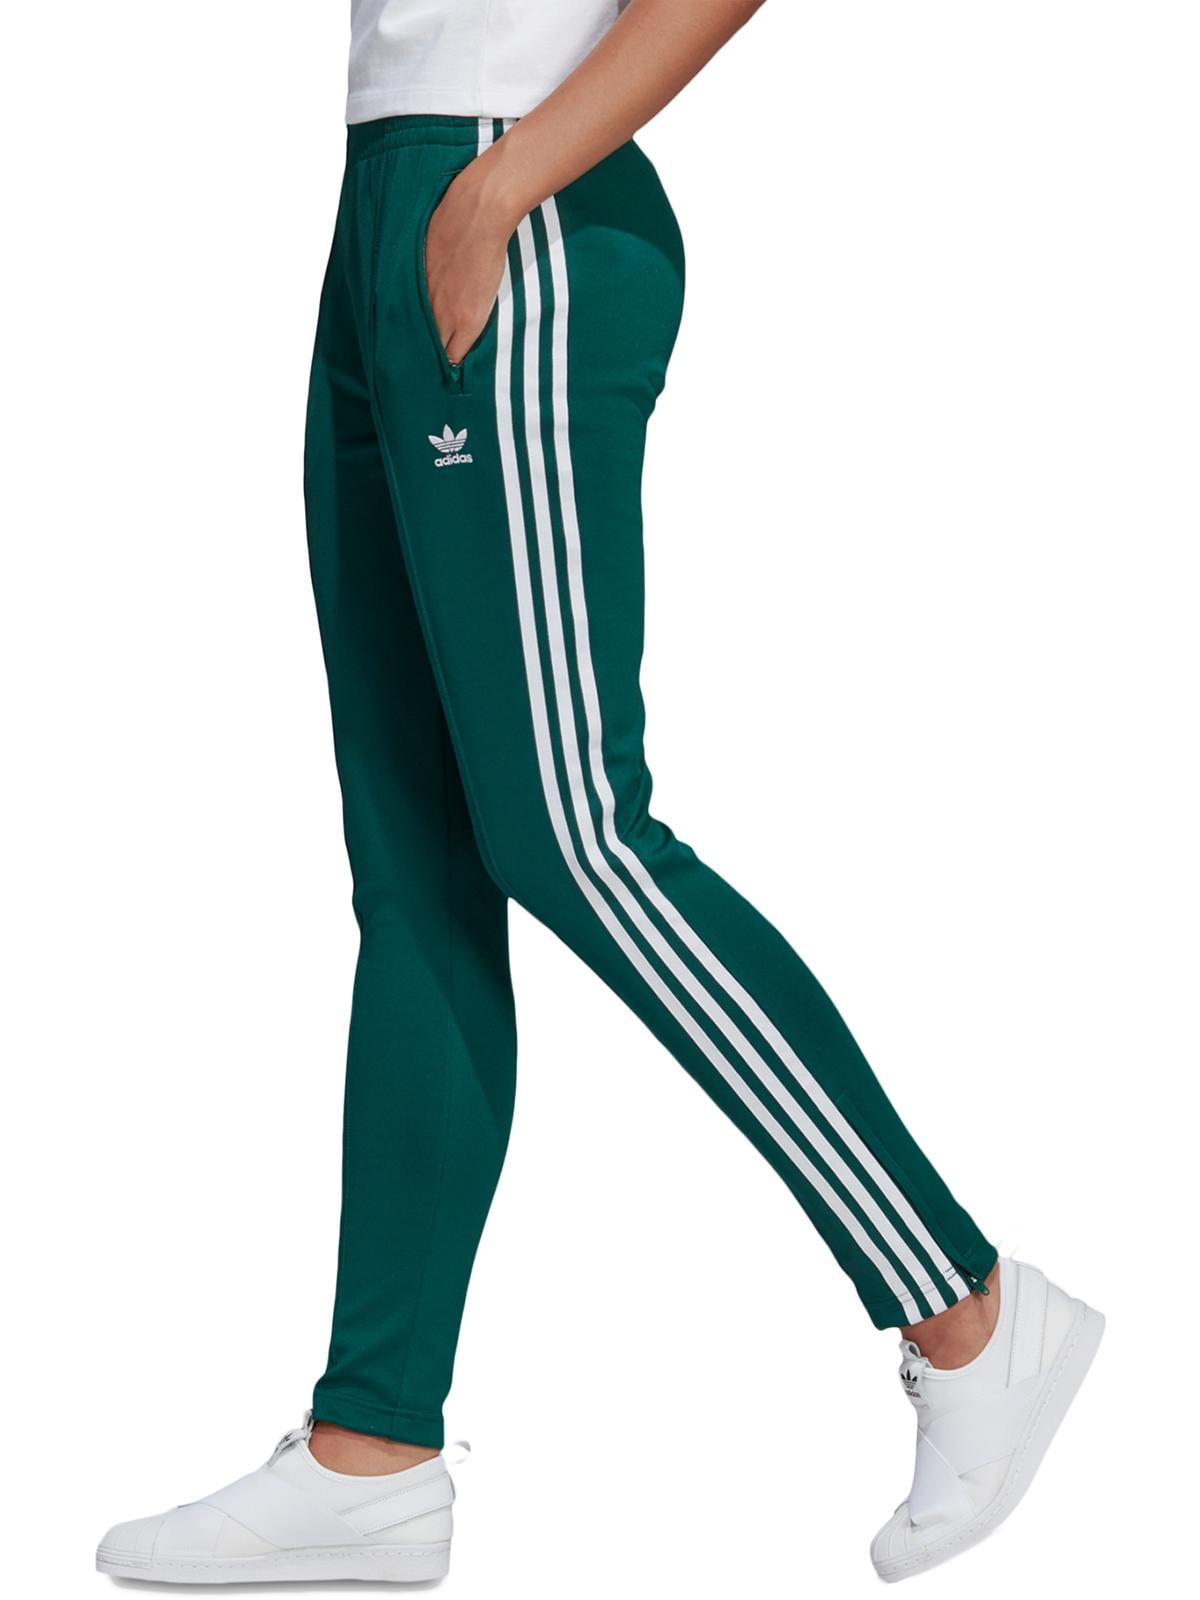 Abfertigung adidas Originals Womens Adicolor Track S Green Fitness Pants Superstar Workout